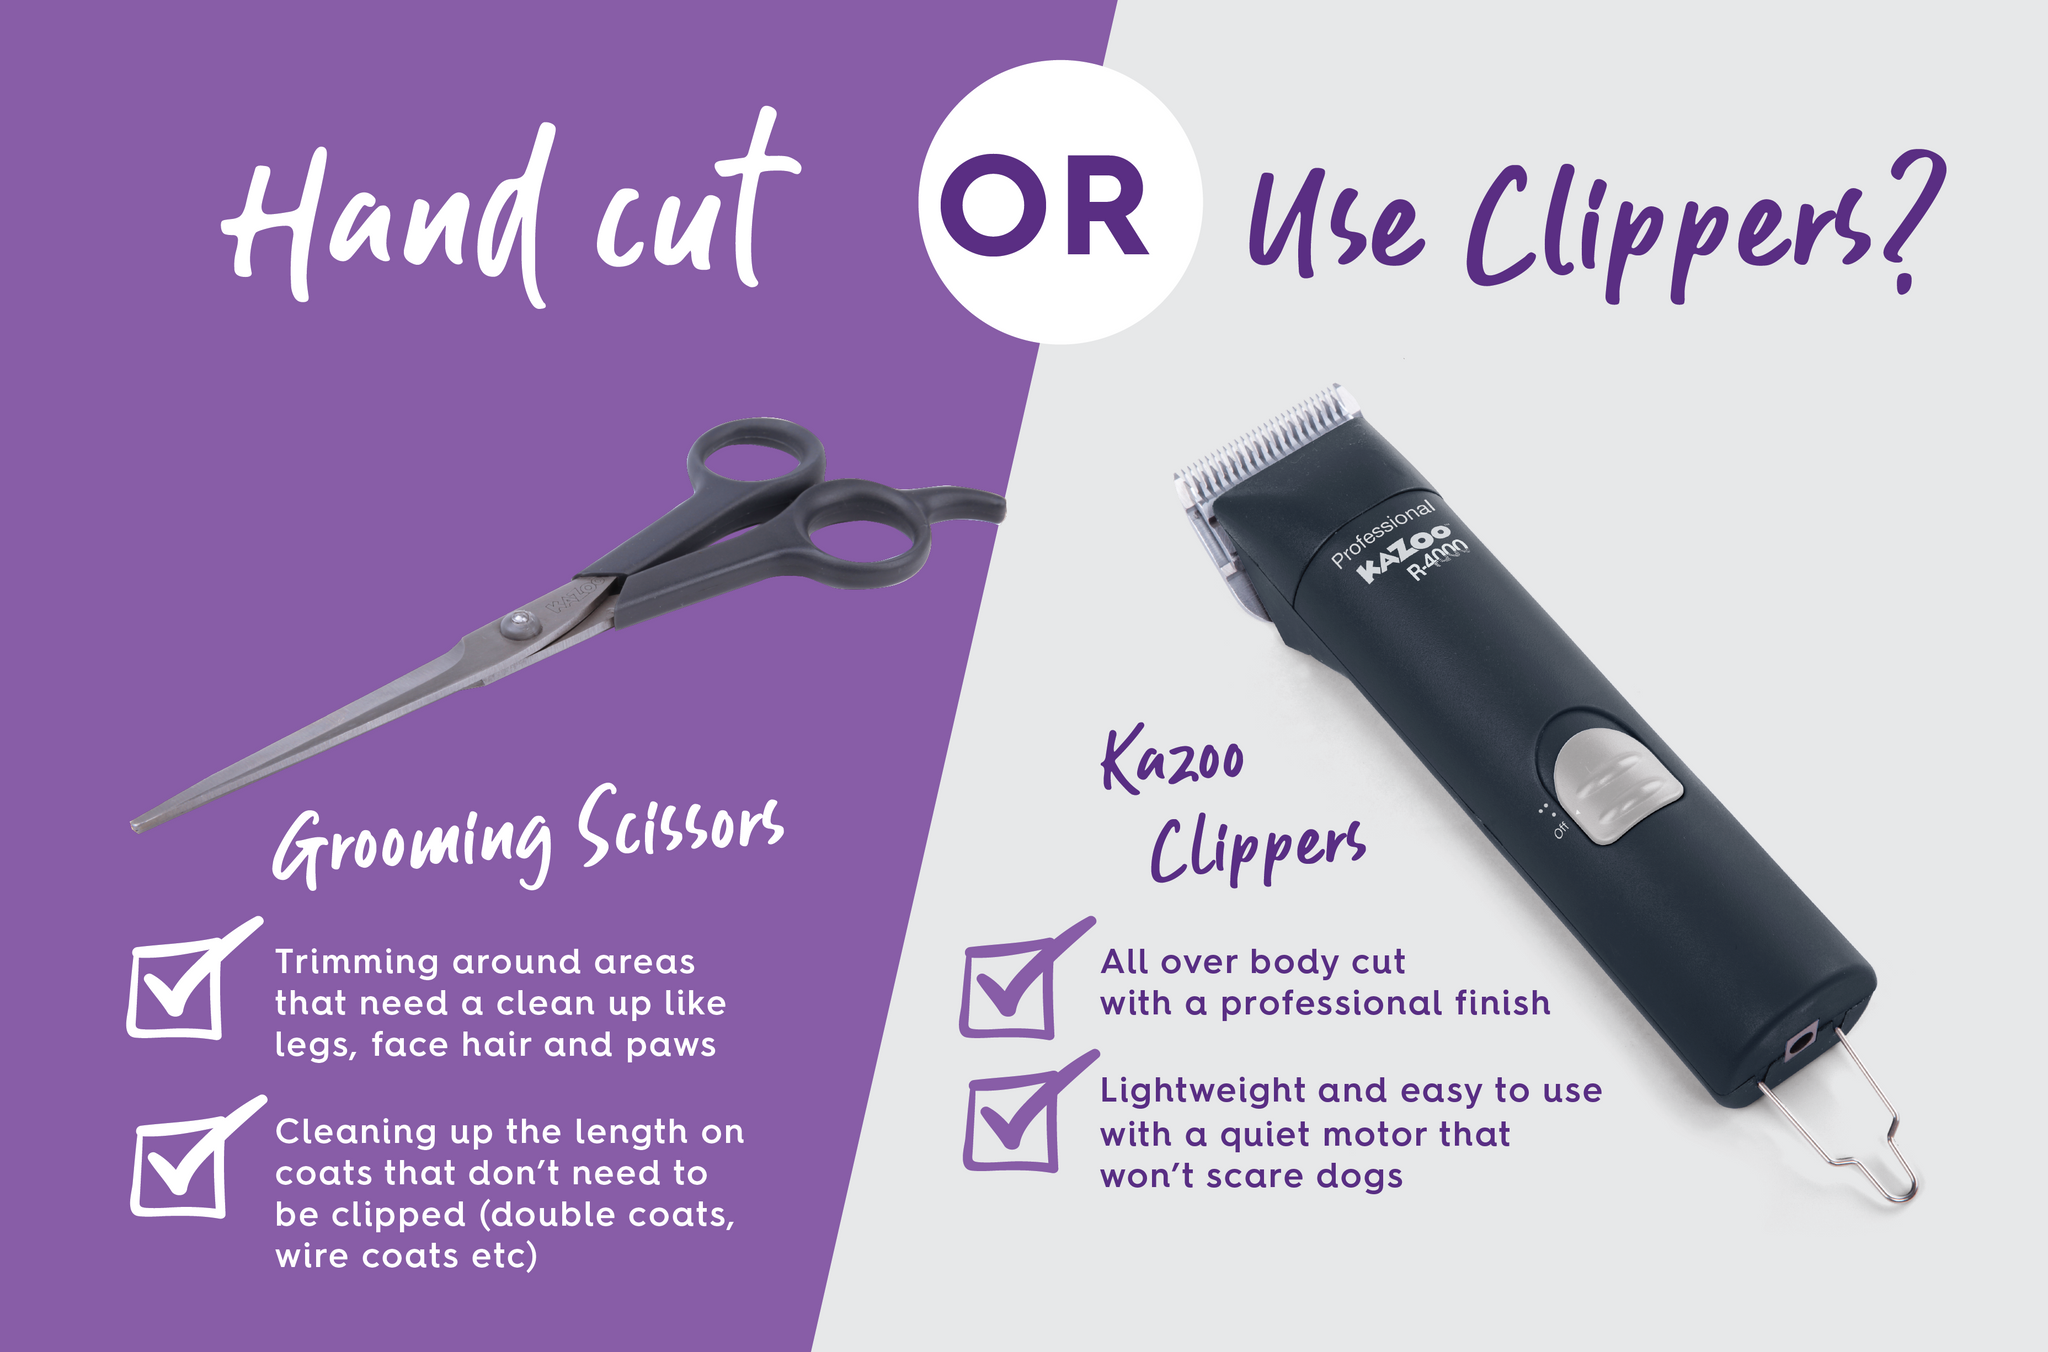 Kazoo dog grooming scissors vs kazoo dog grooming clippers